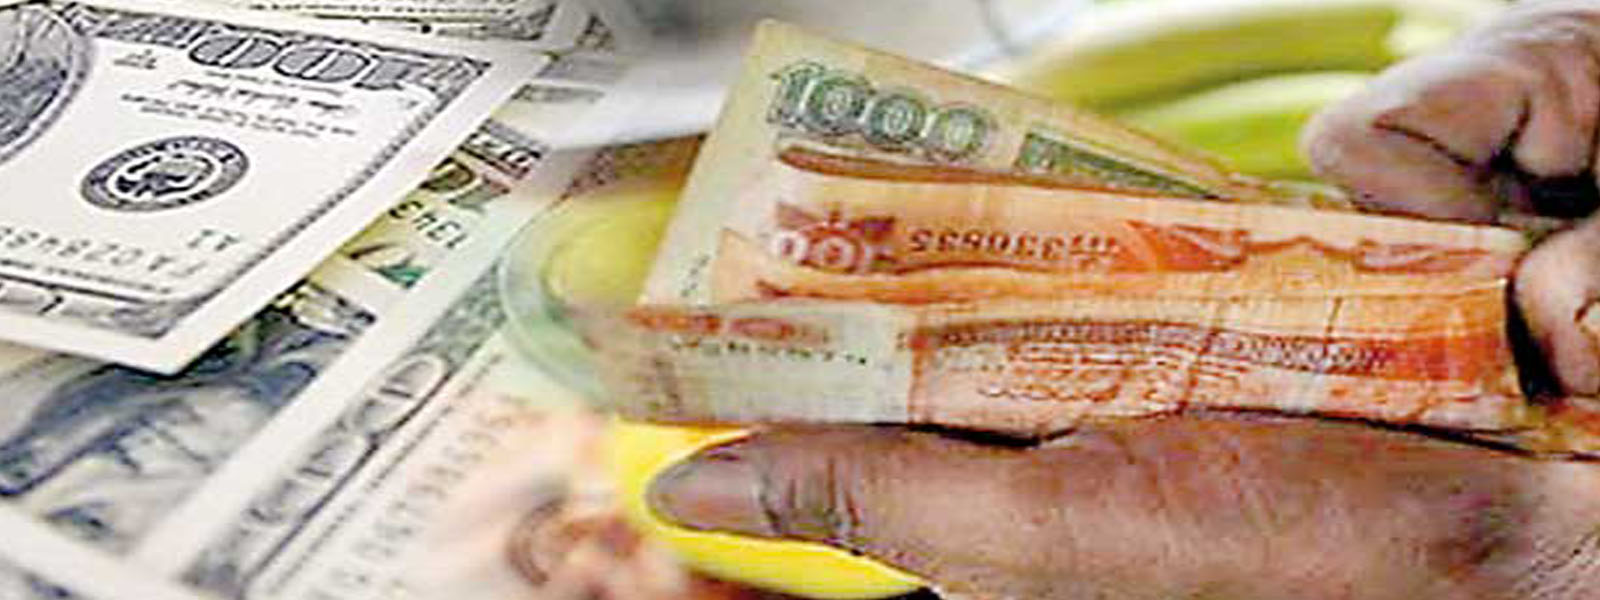 SL rupee hits record low